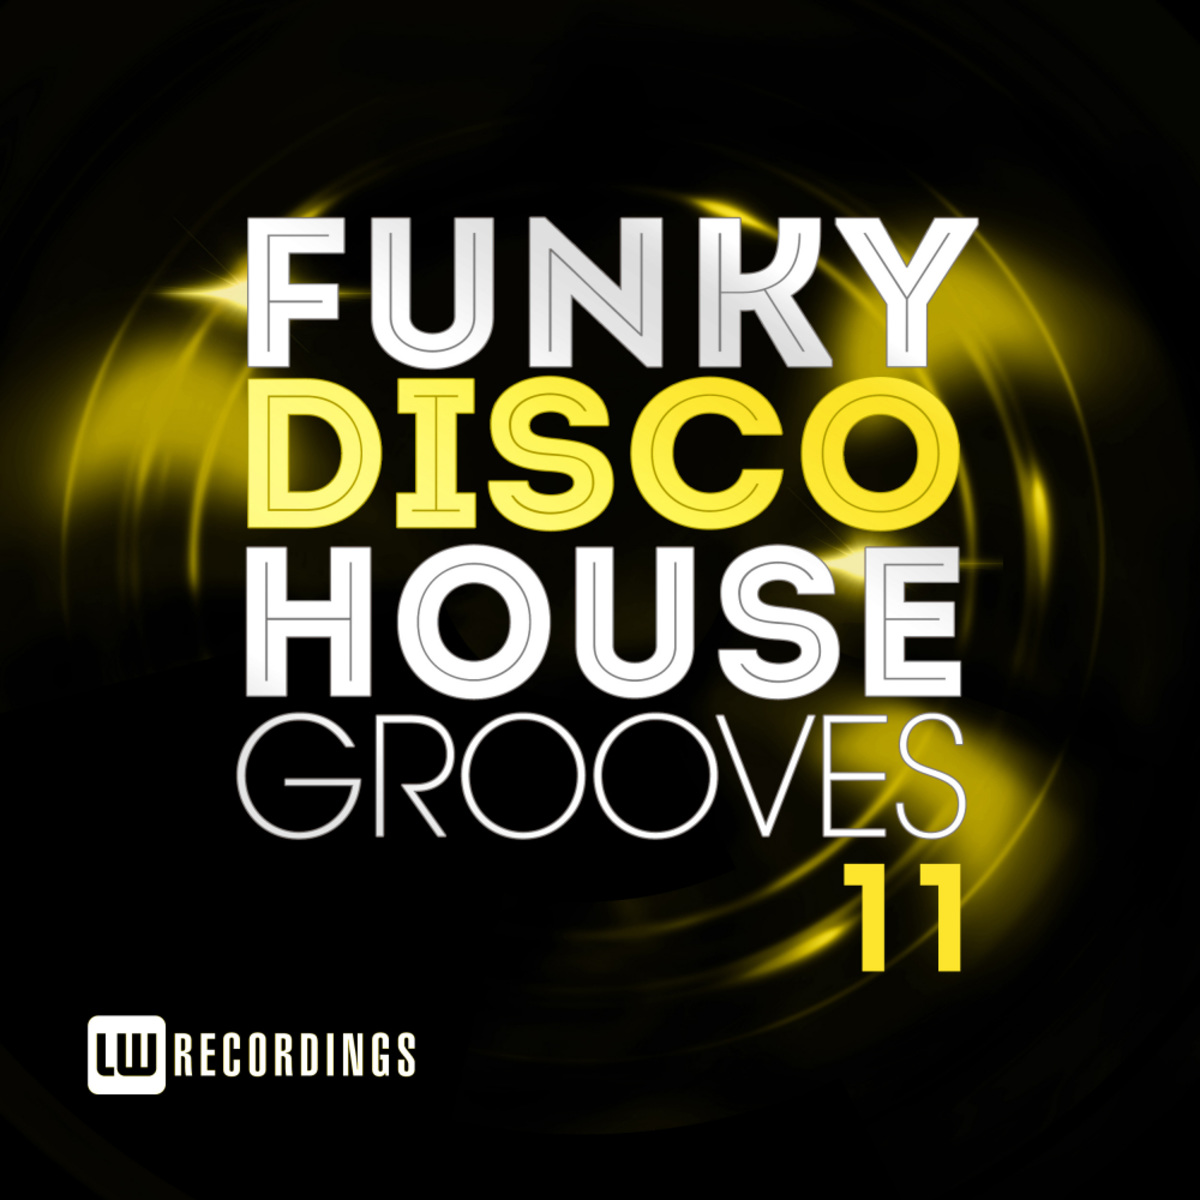 VA - Funky Disco House Grooves, Vol. 11 / LW Recordings